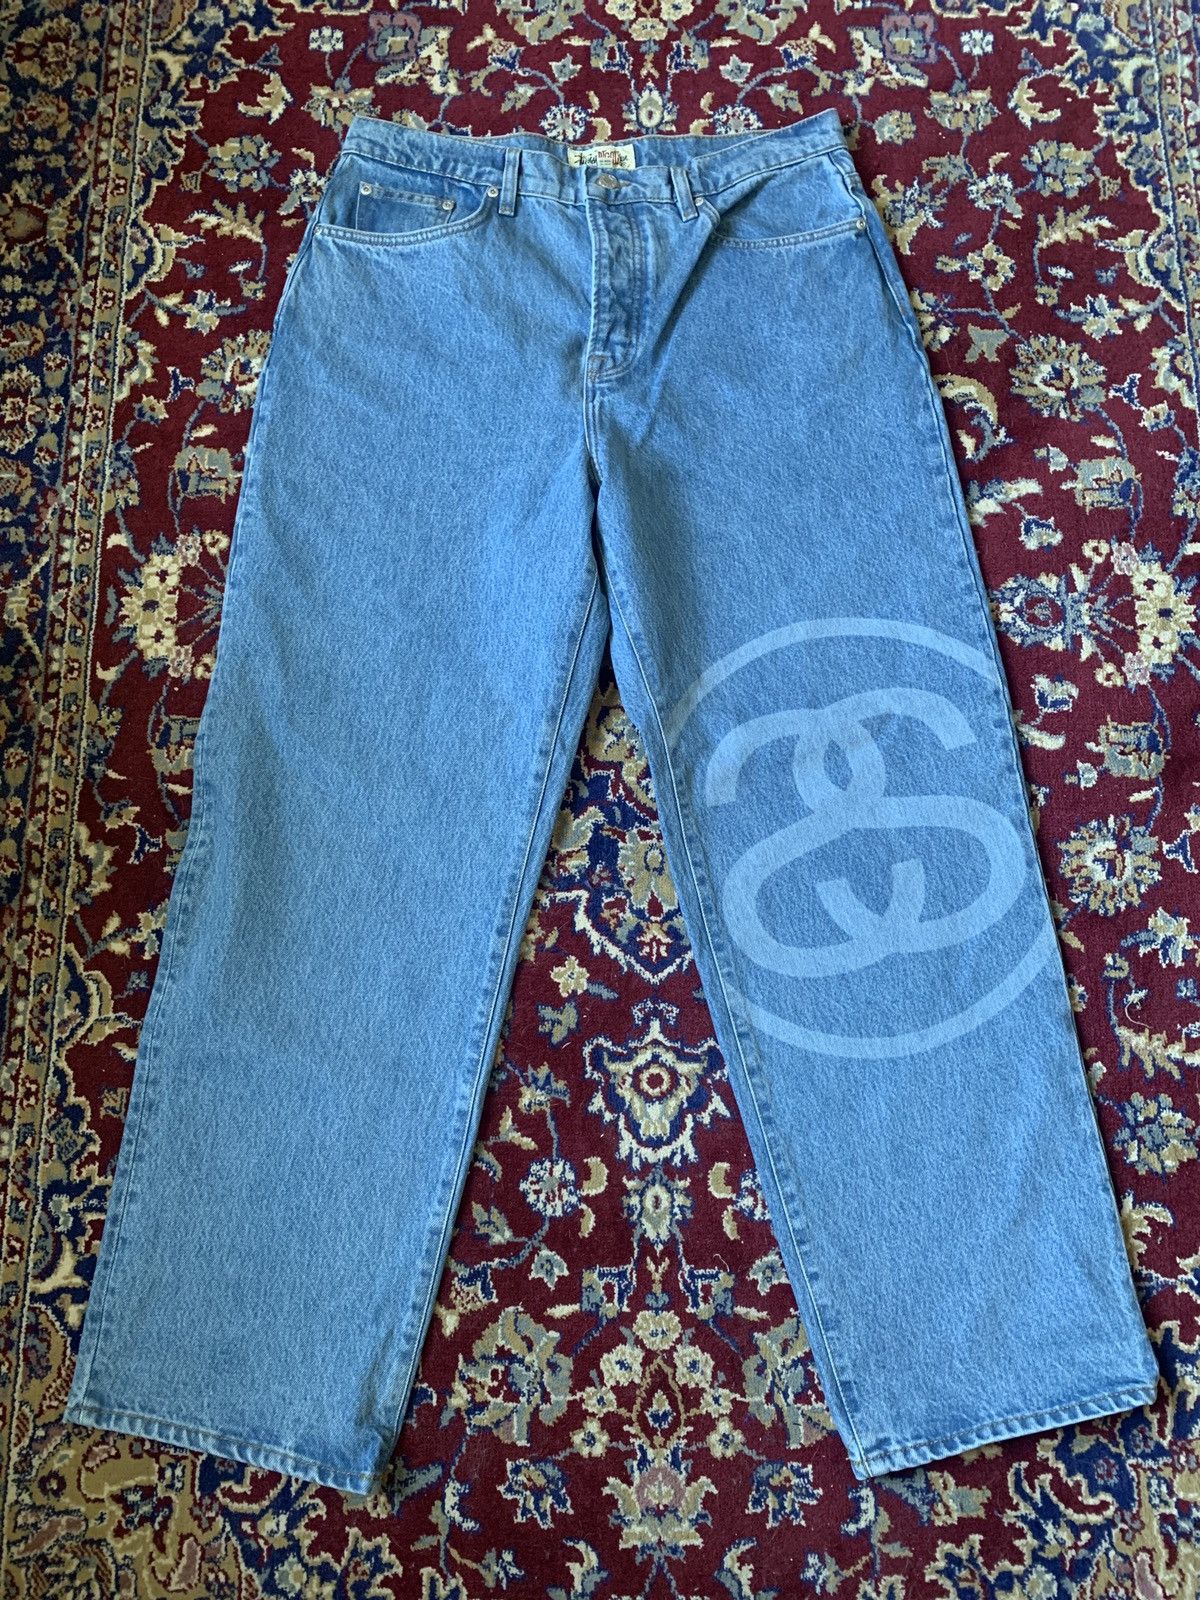 Stussy Stussy SS-link Big Ol Jeans | Grailed